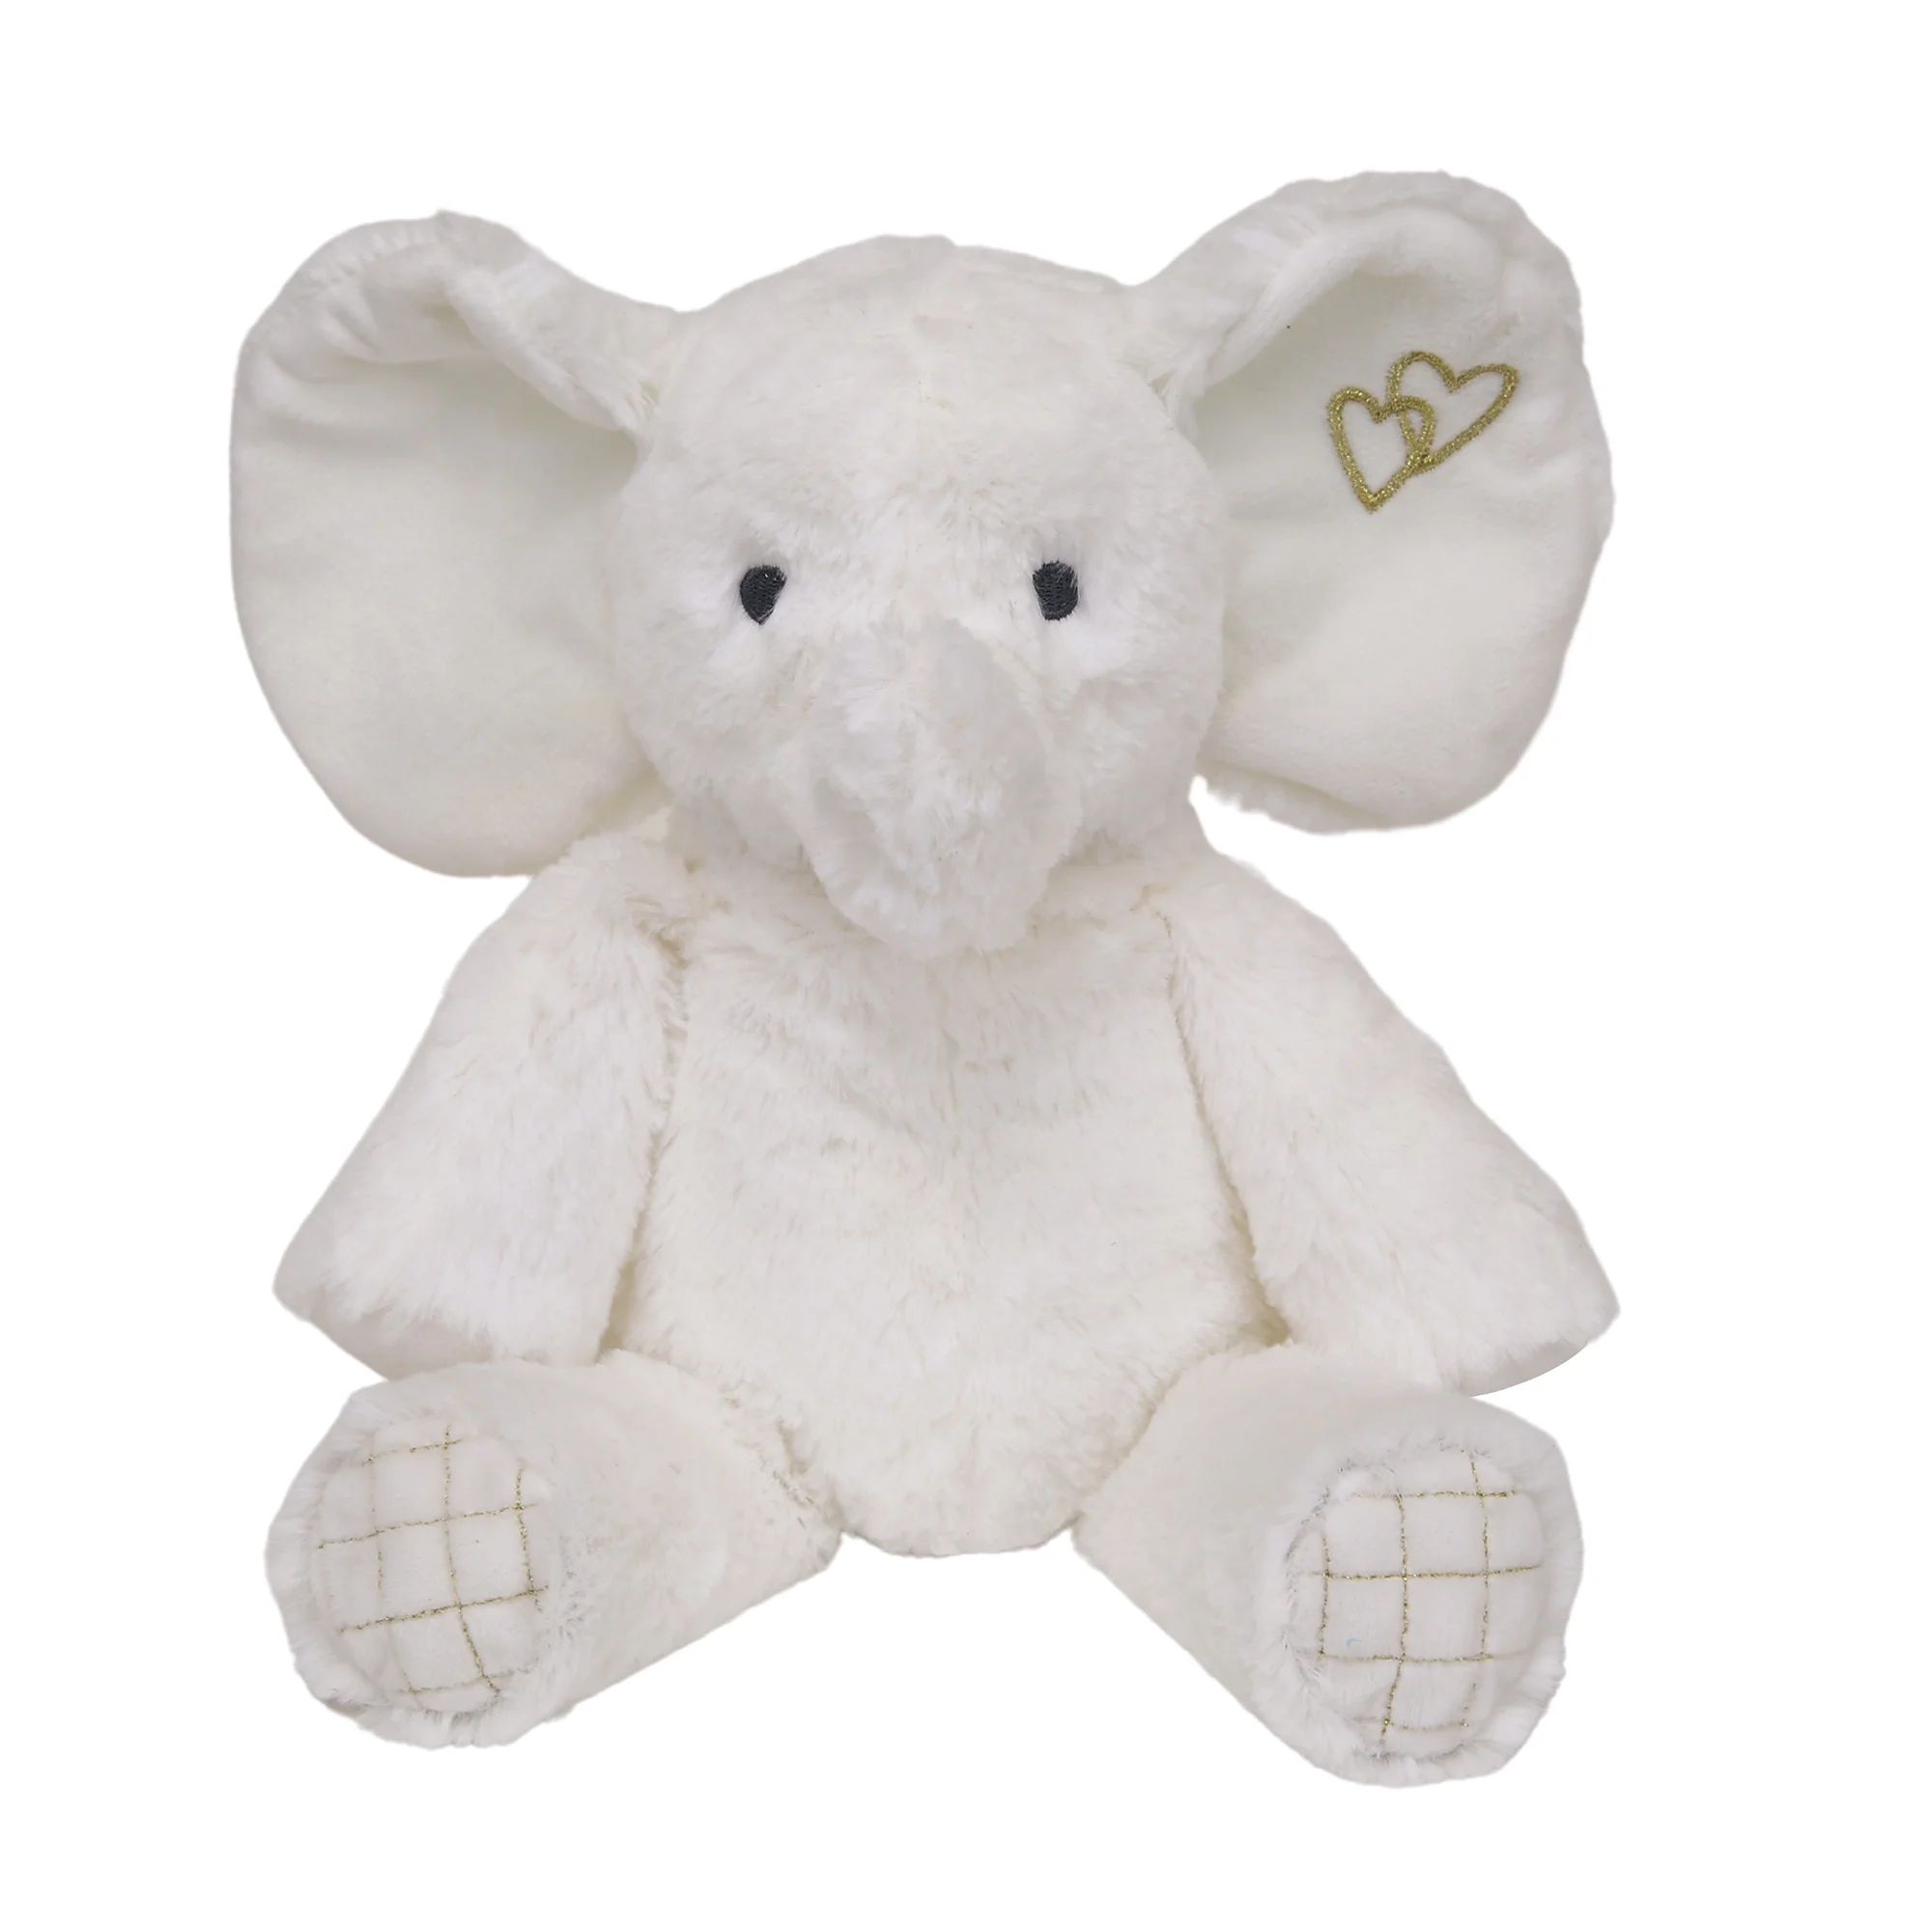 Lambs & Ivy Signature Jamboree Plush Elephant - Marshmallow - Gray, Gold, White | Walmart (US)